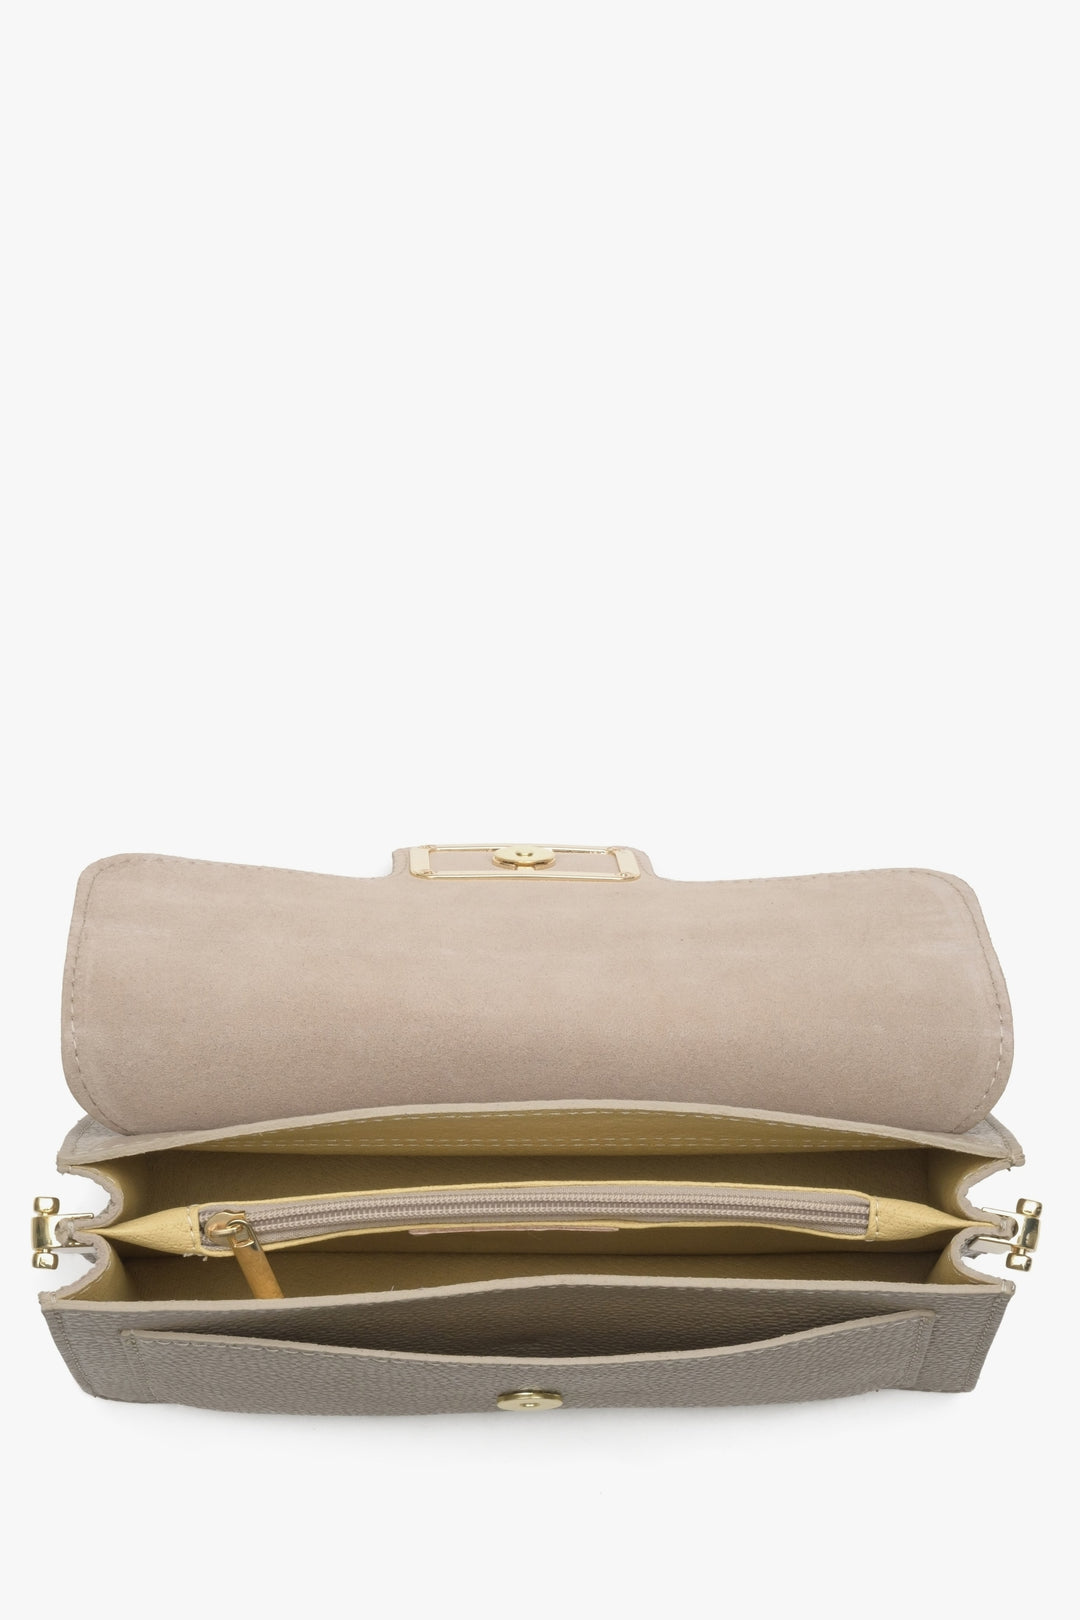 Estro women's beige practical handbag made of Italian genuine leather - close-up on the interior of the model.